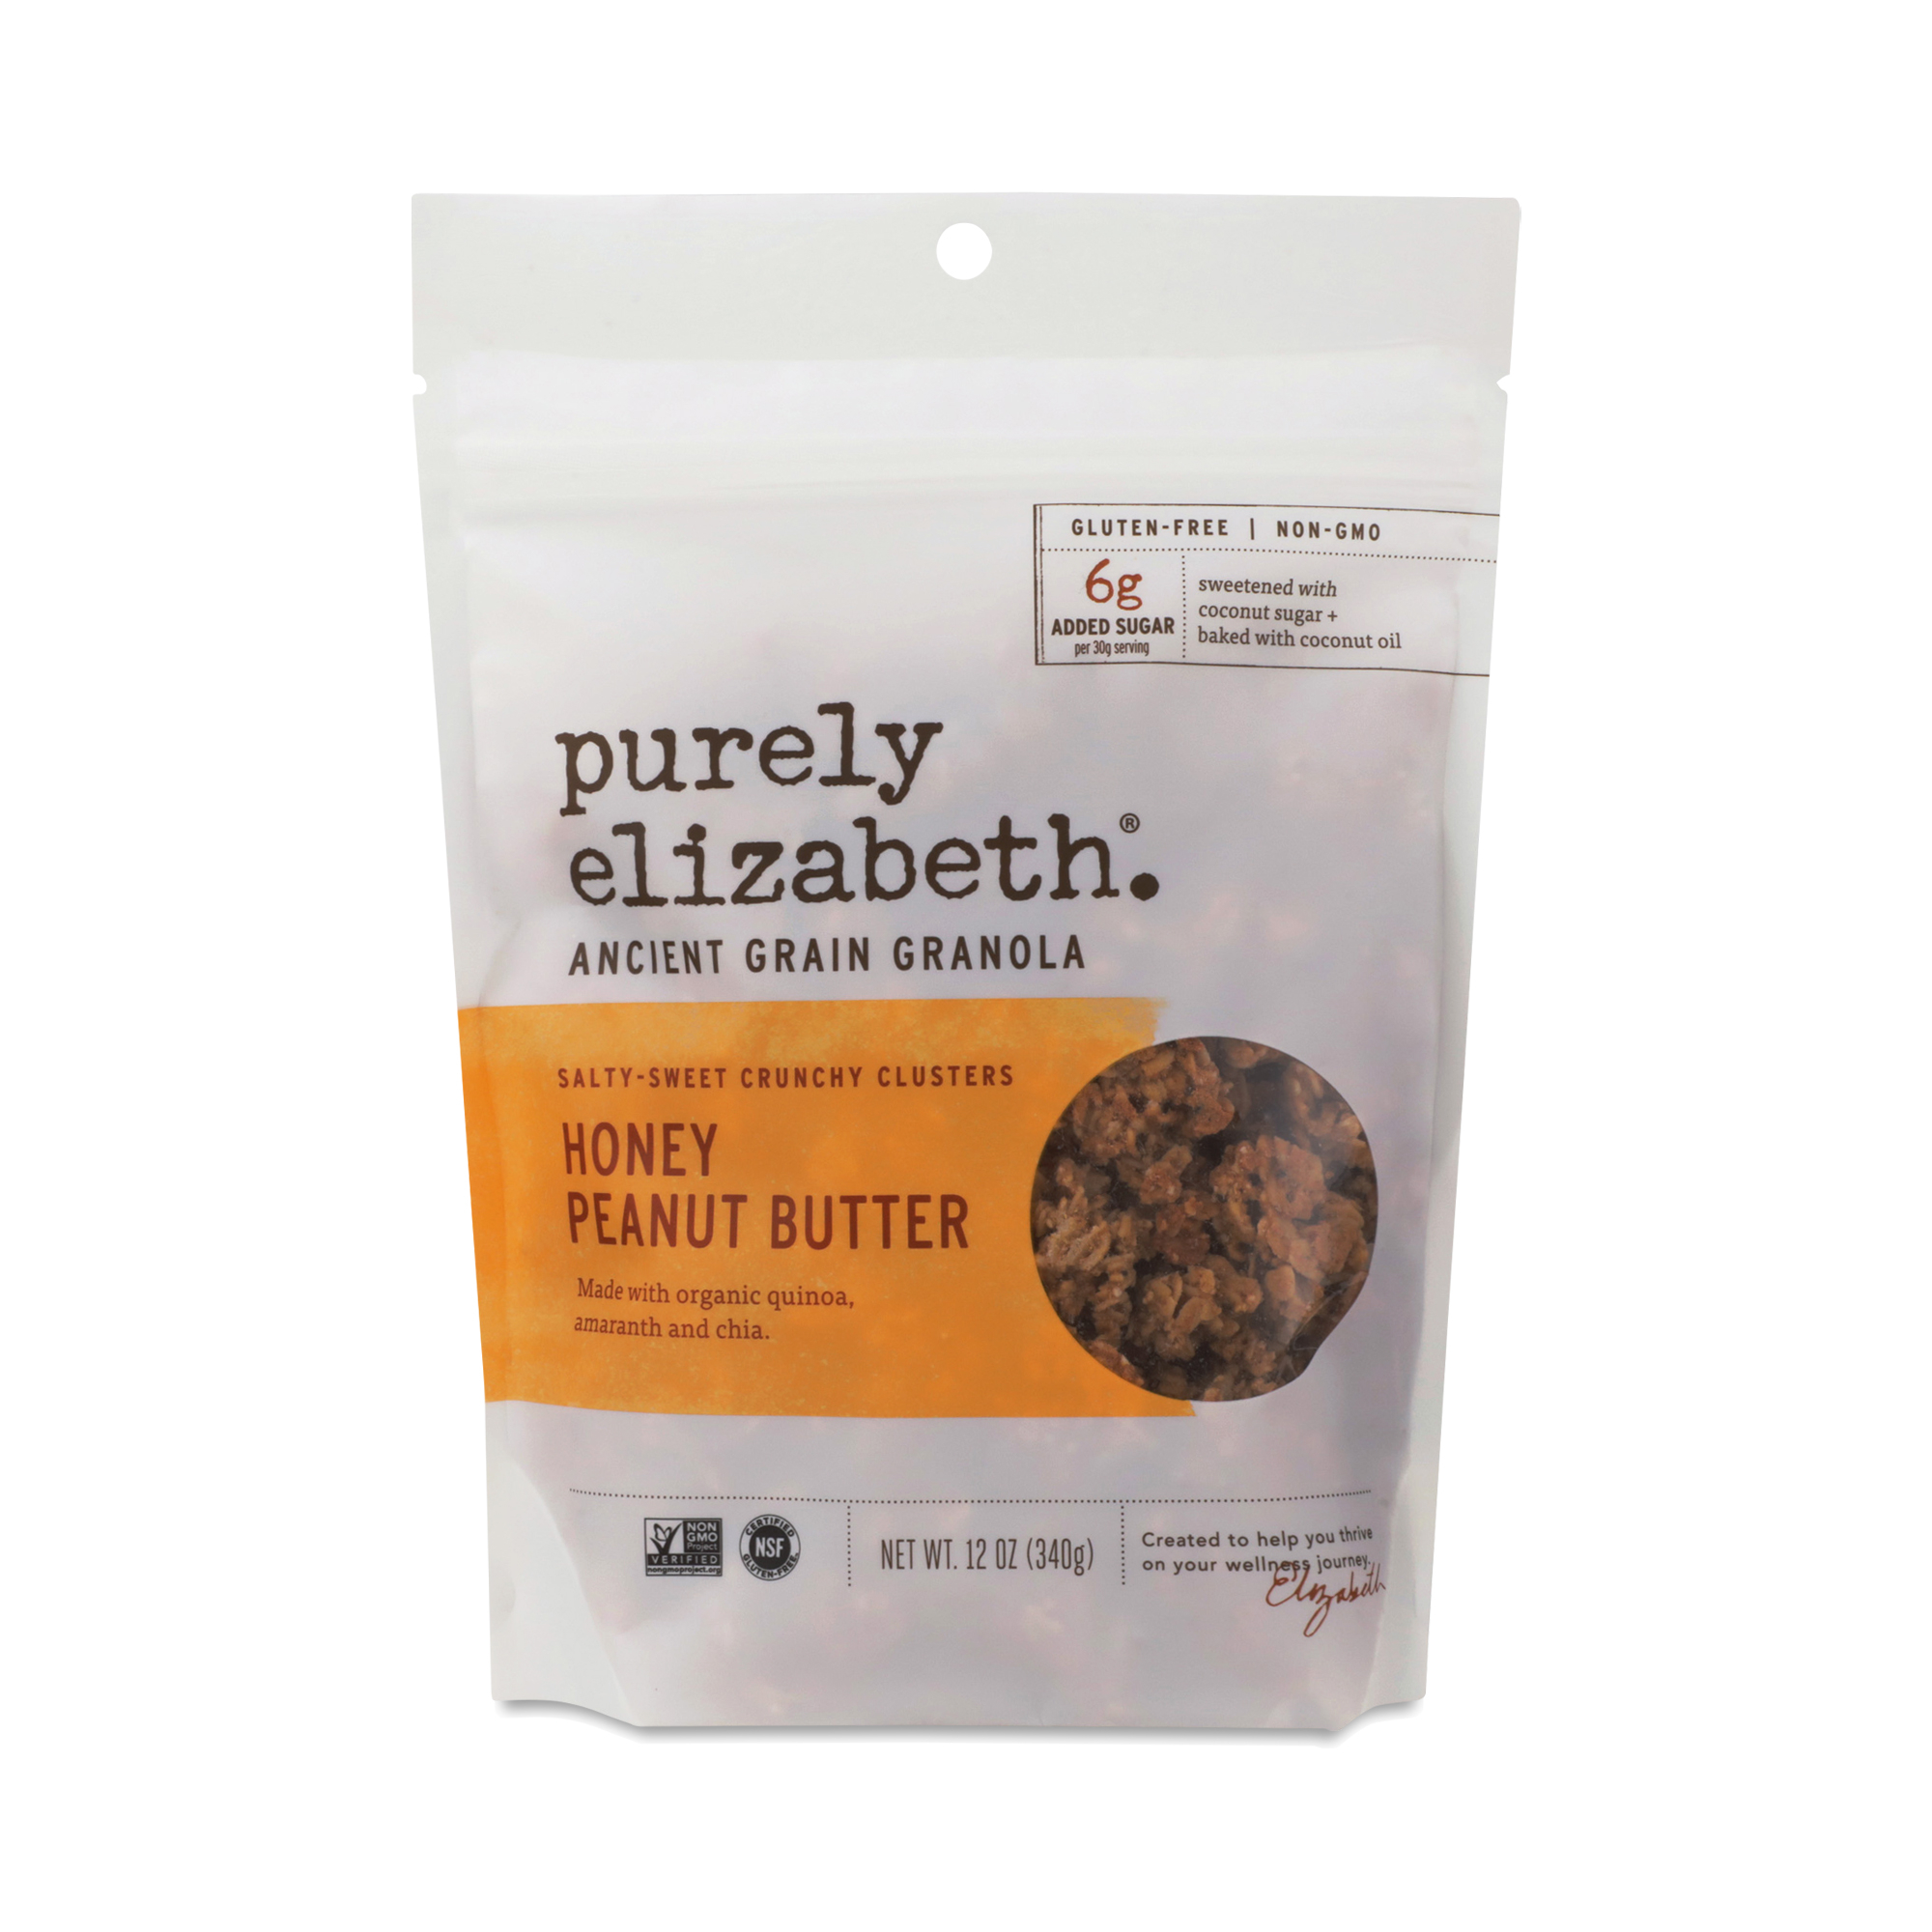 Purely Elizabeth Ancient Grain Granola, Honey Peanut Butter 12 oz bag